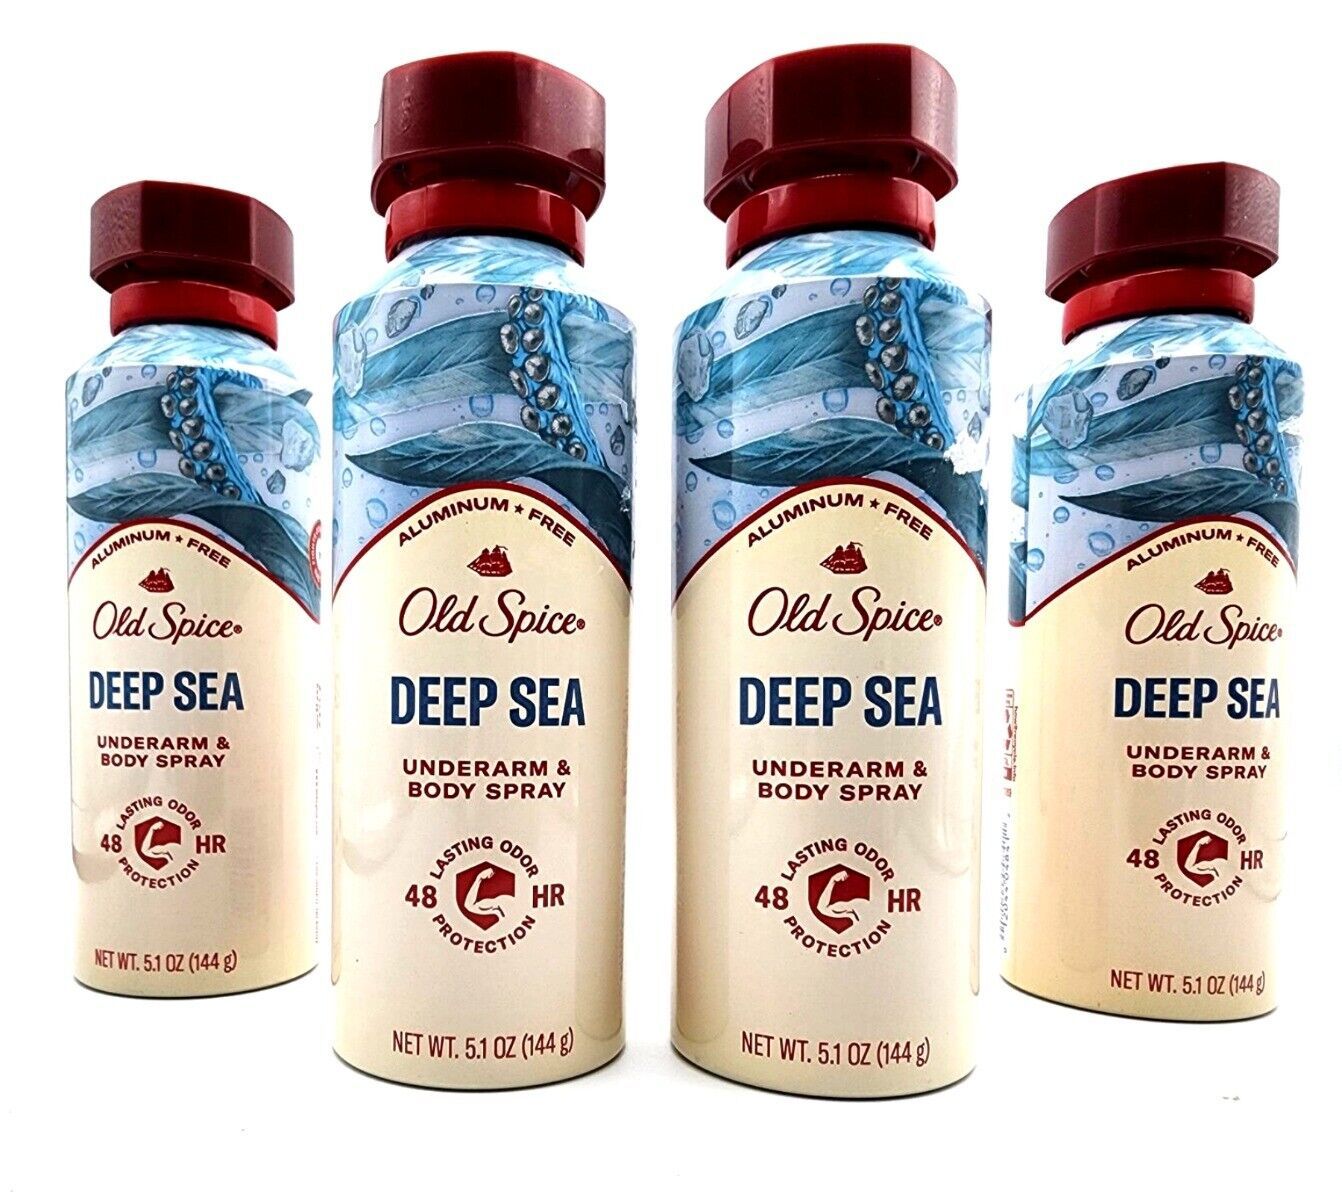 4 Old Spice Underarm & Body Spray-Deep Sea 48hr odor control aluminum free 5.1oz - $38.97